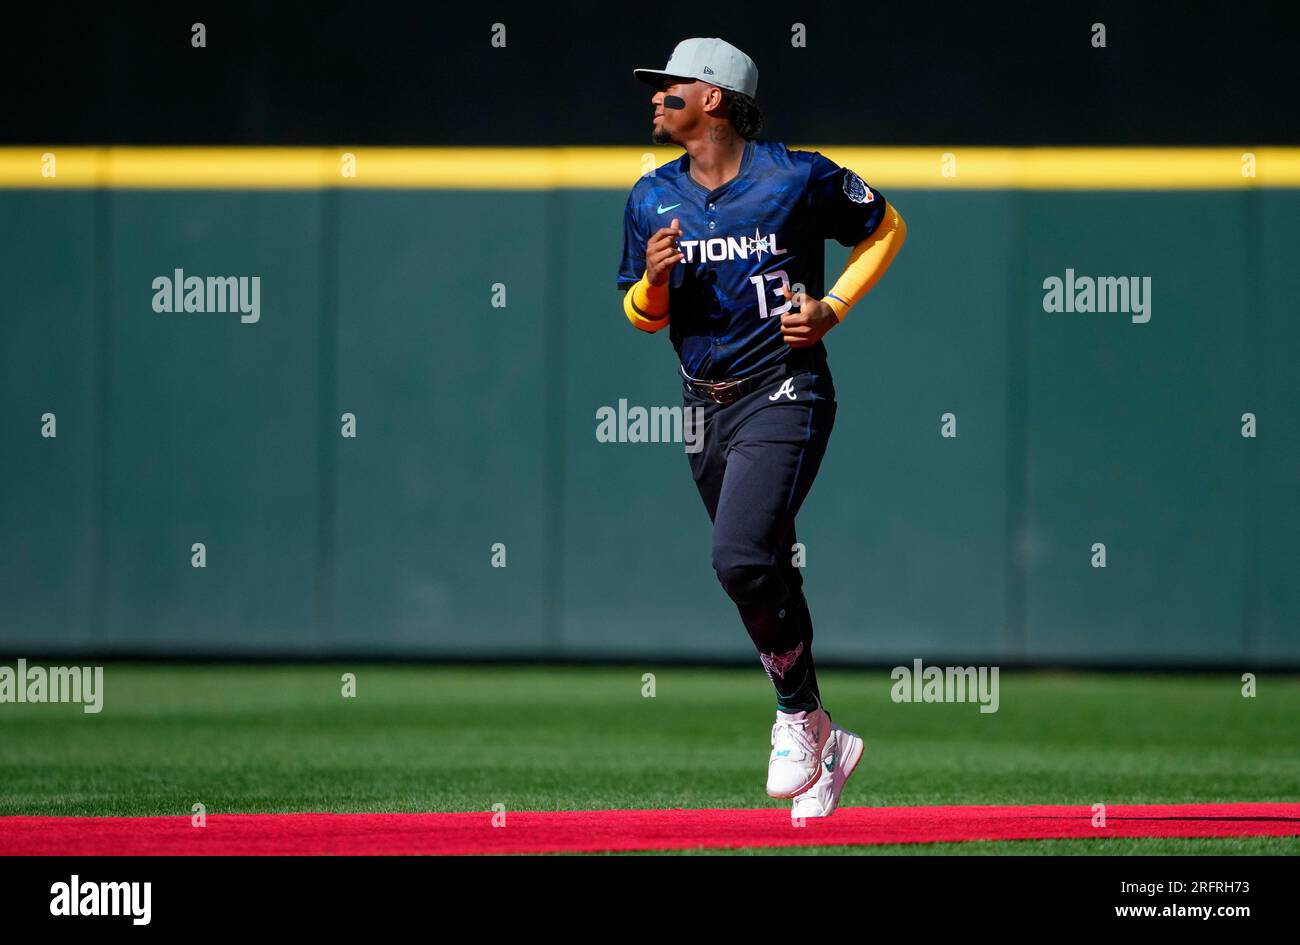 National League's Ronald Acuña Jr., of the Atlanta Braves, jogs